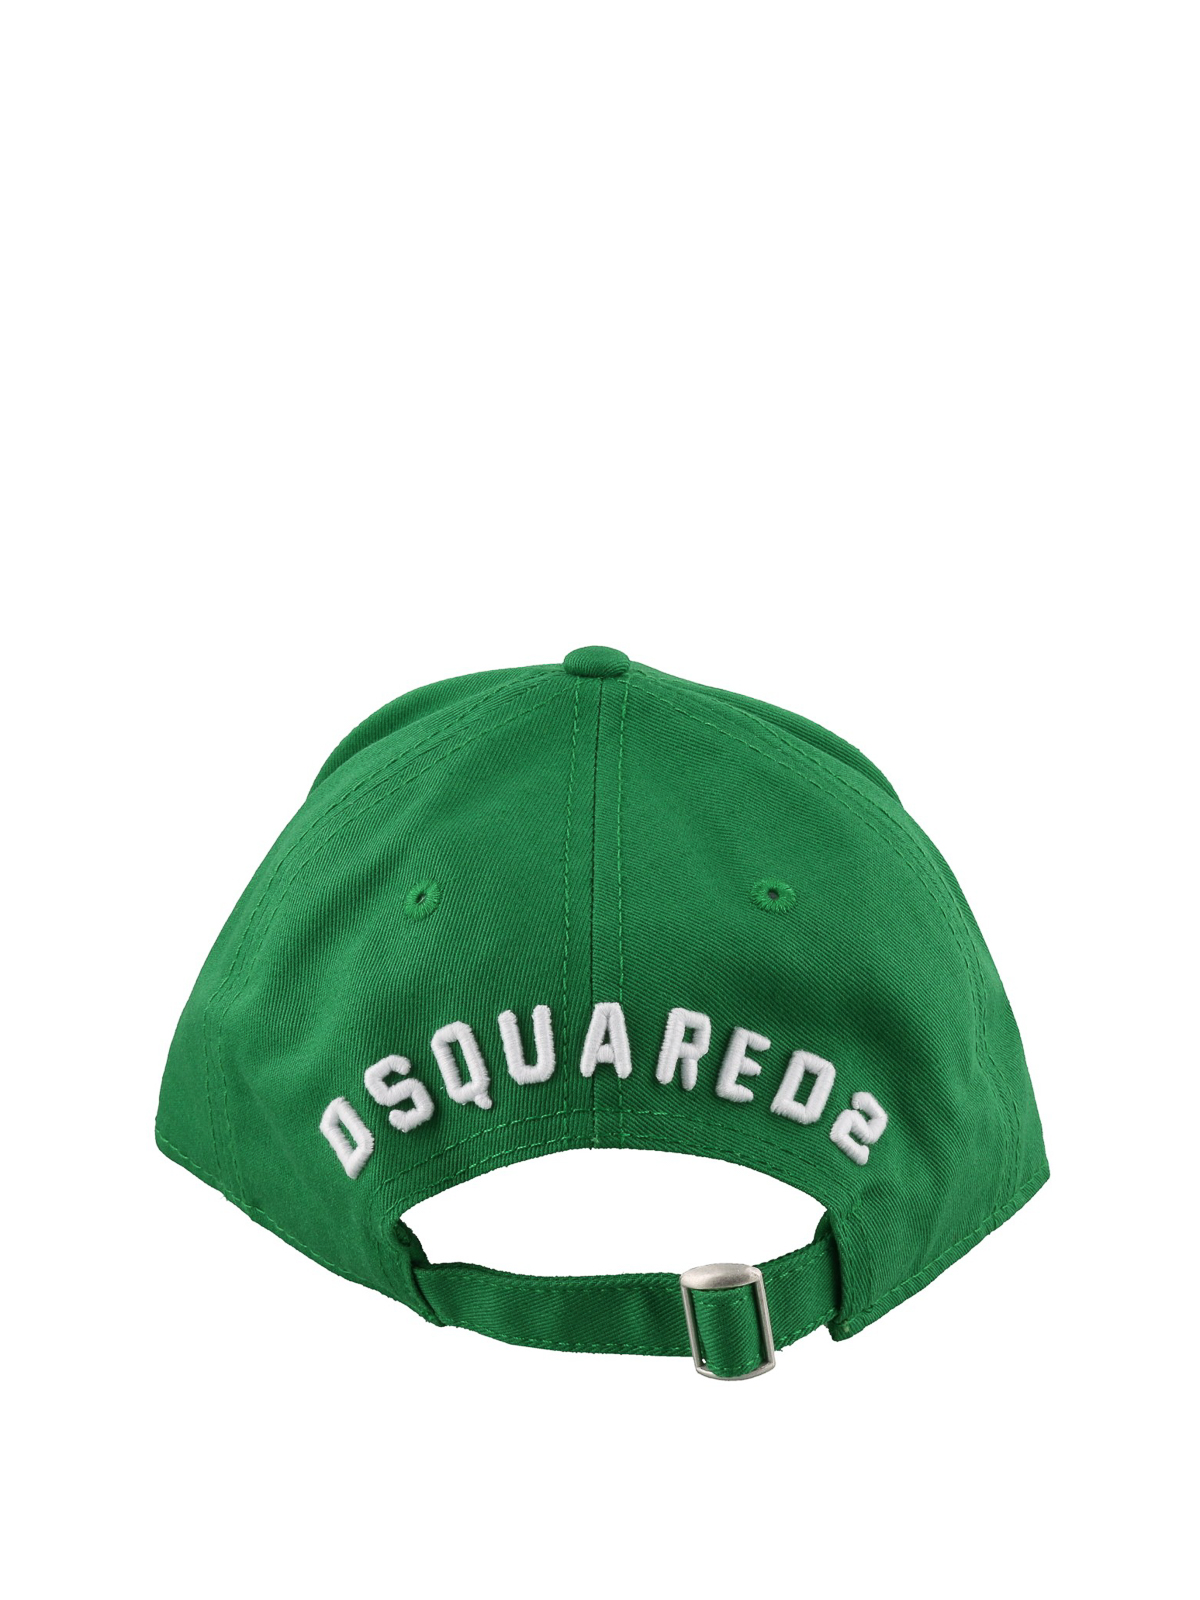 dsquared2 cap green